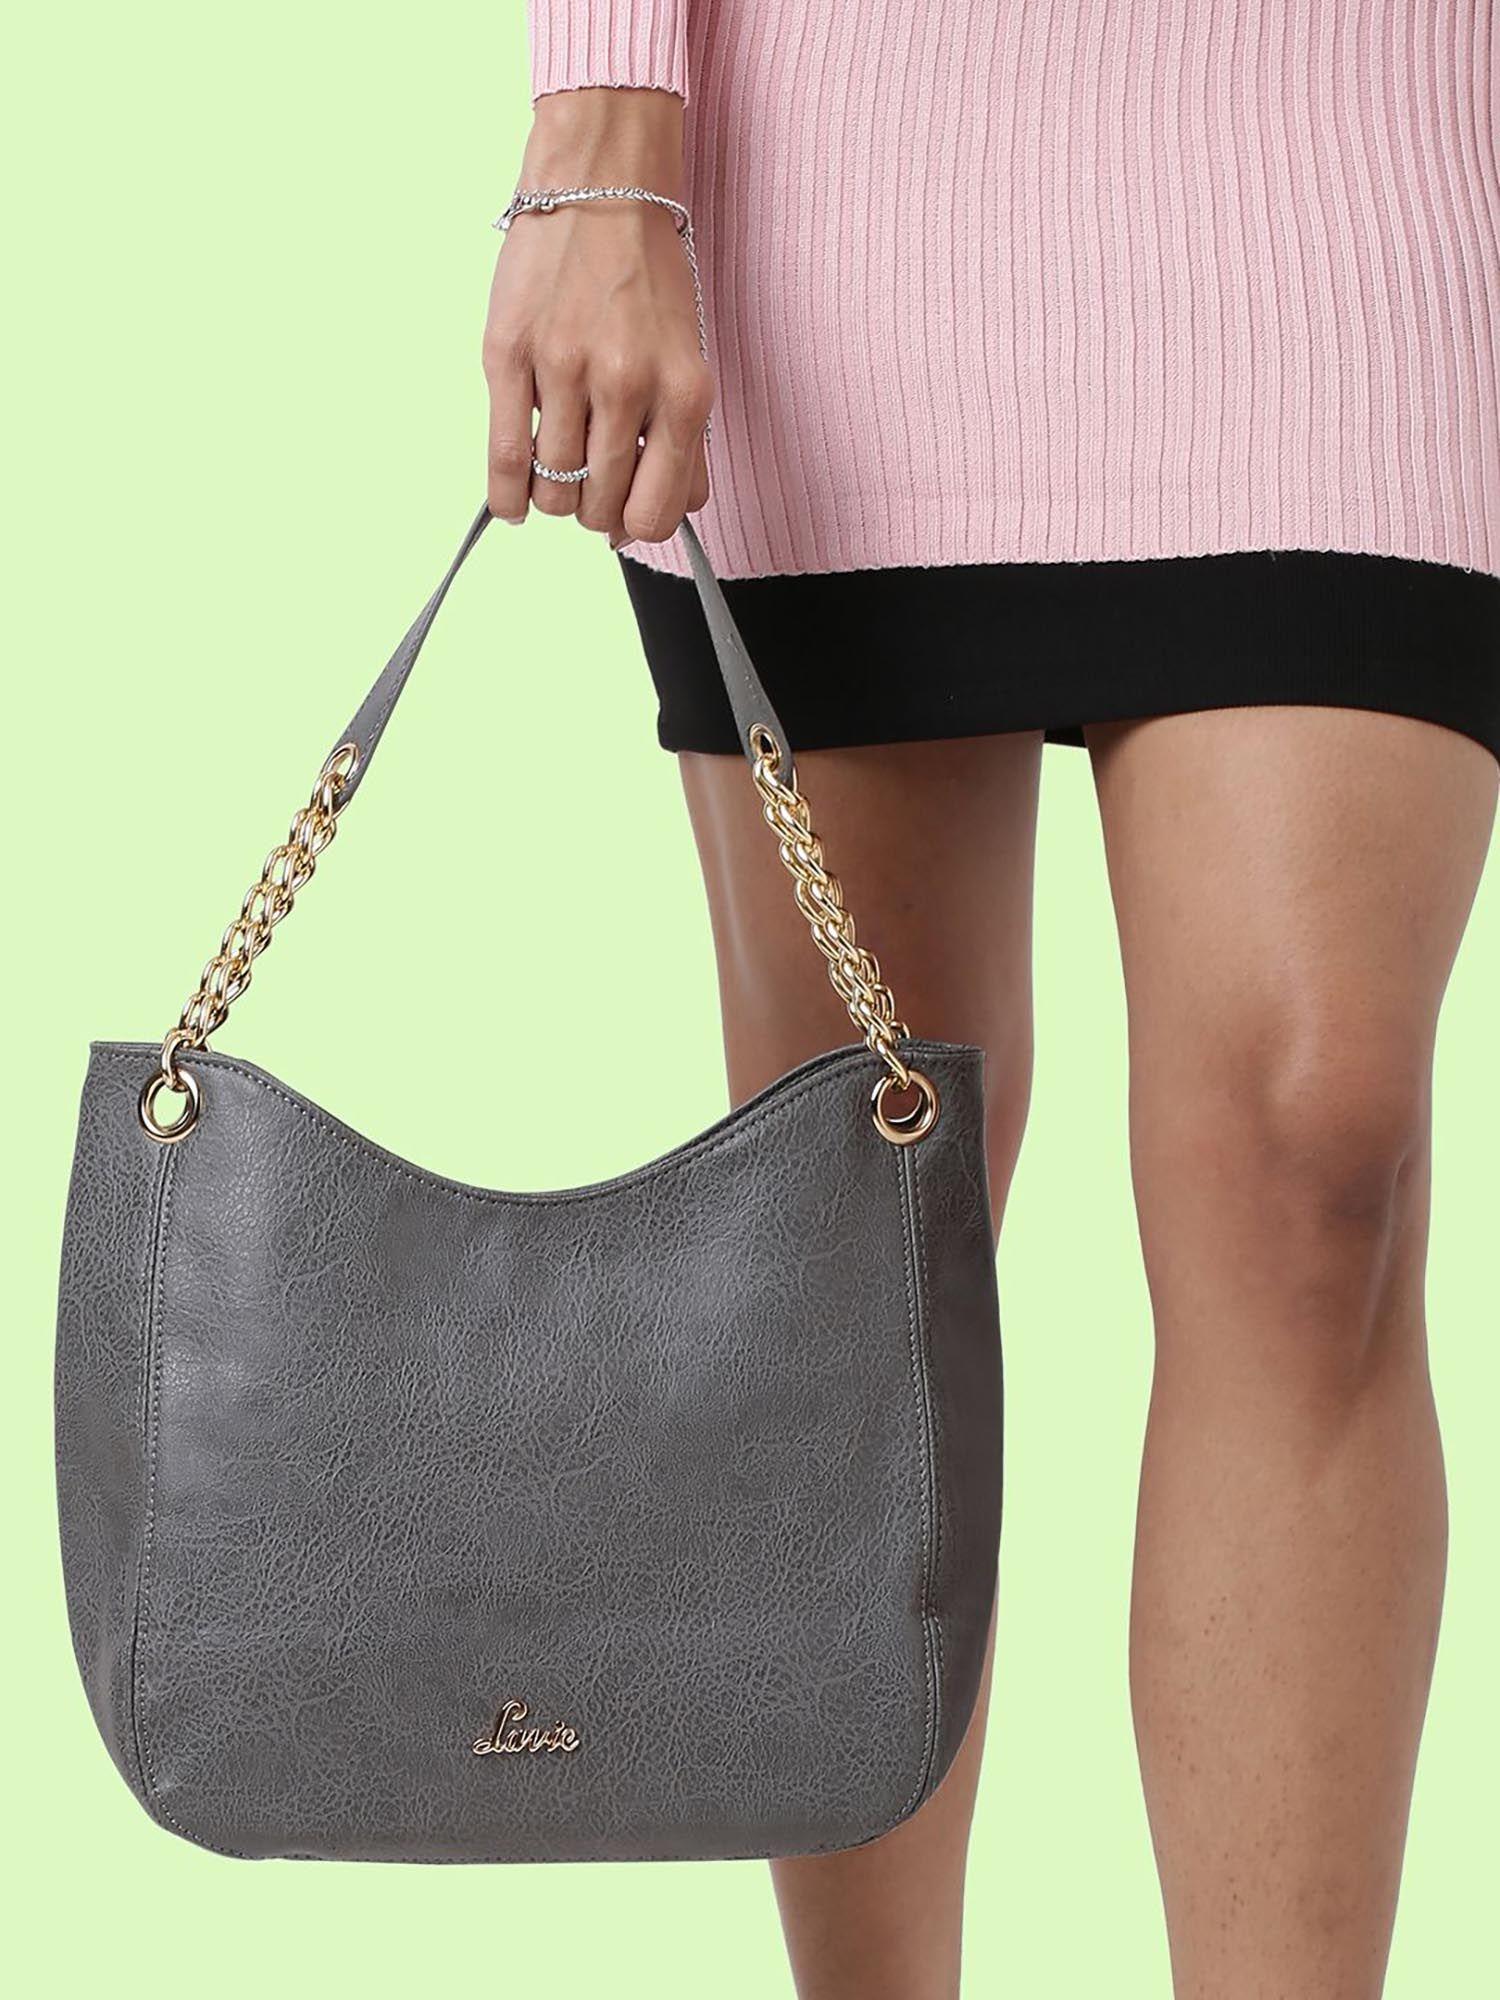 antonio women's large hobo handbag (grey)